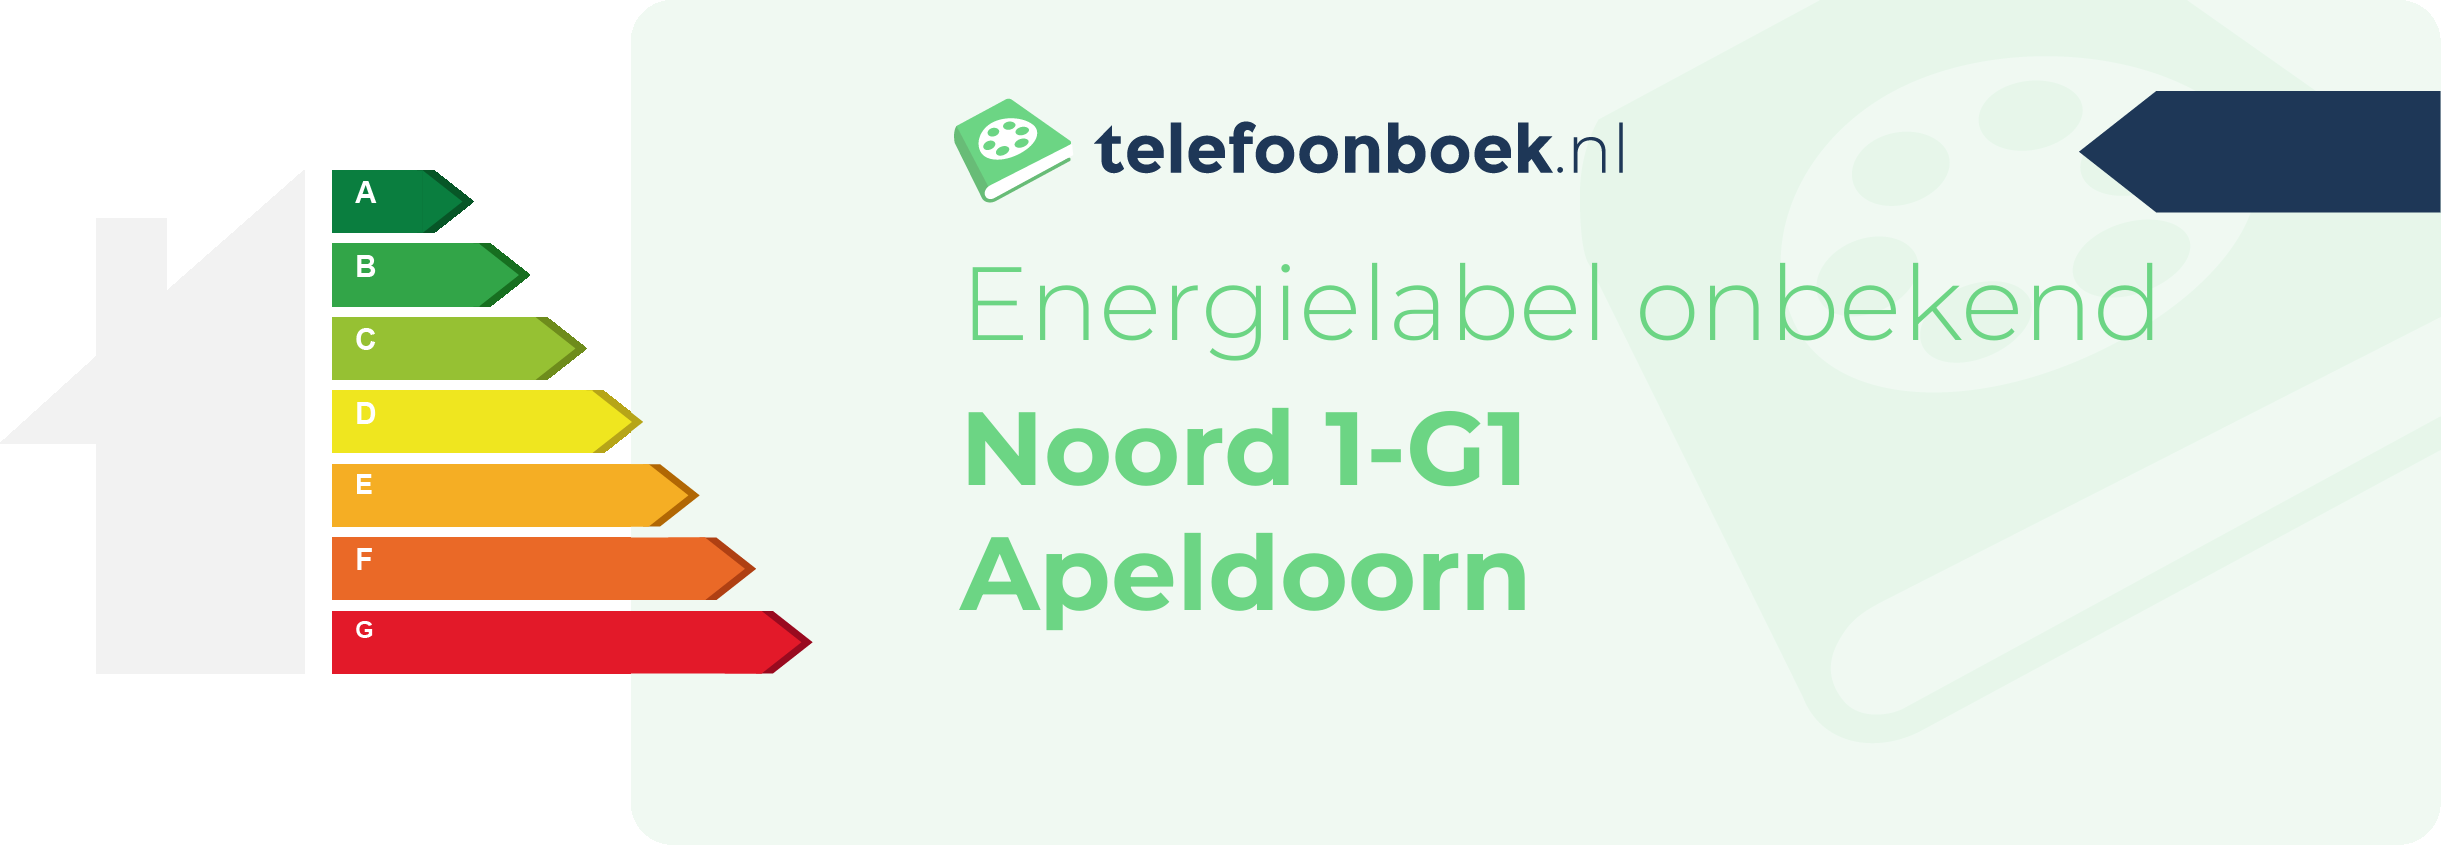 Energielabel Noord 1-G1 Apeldoorn